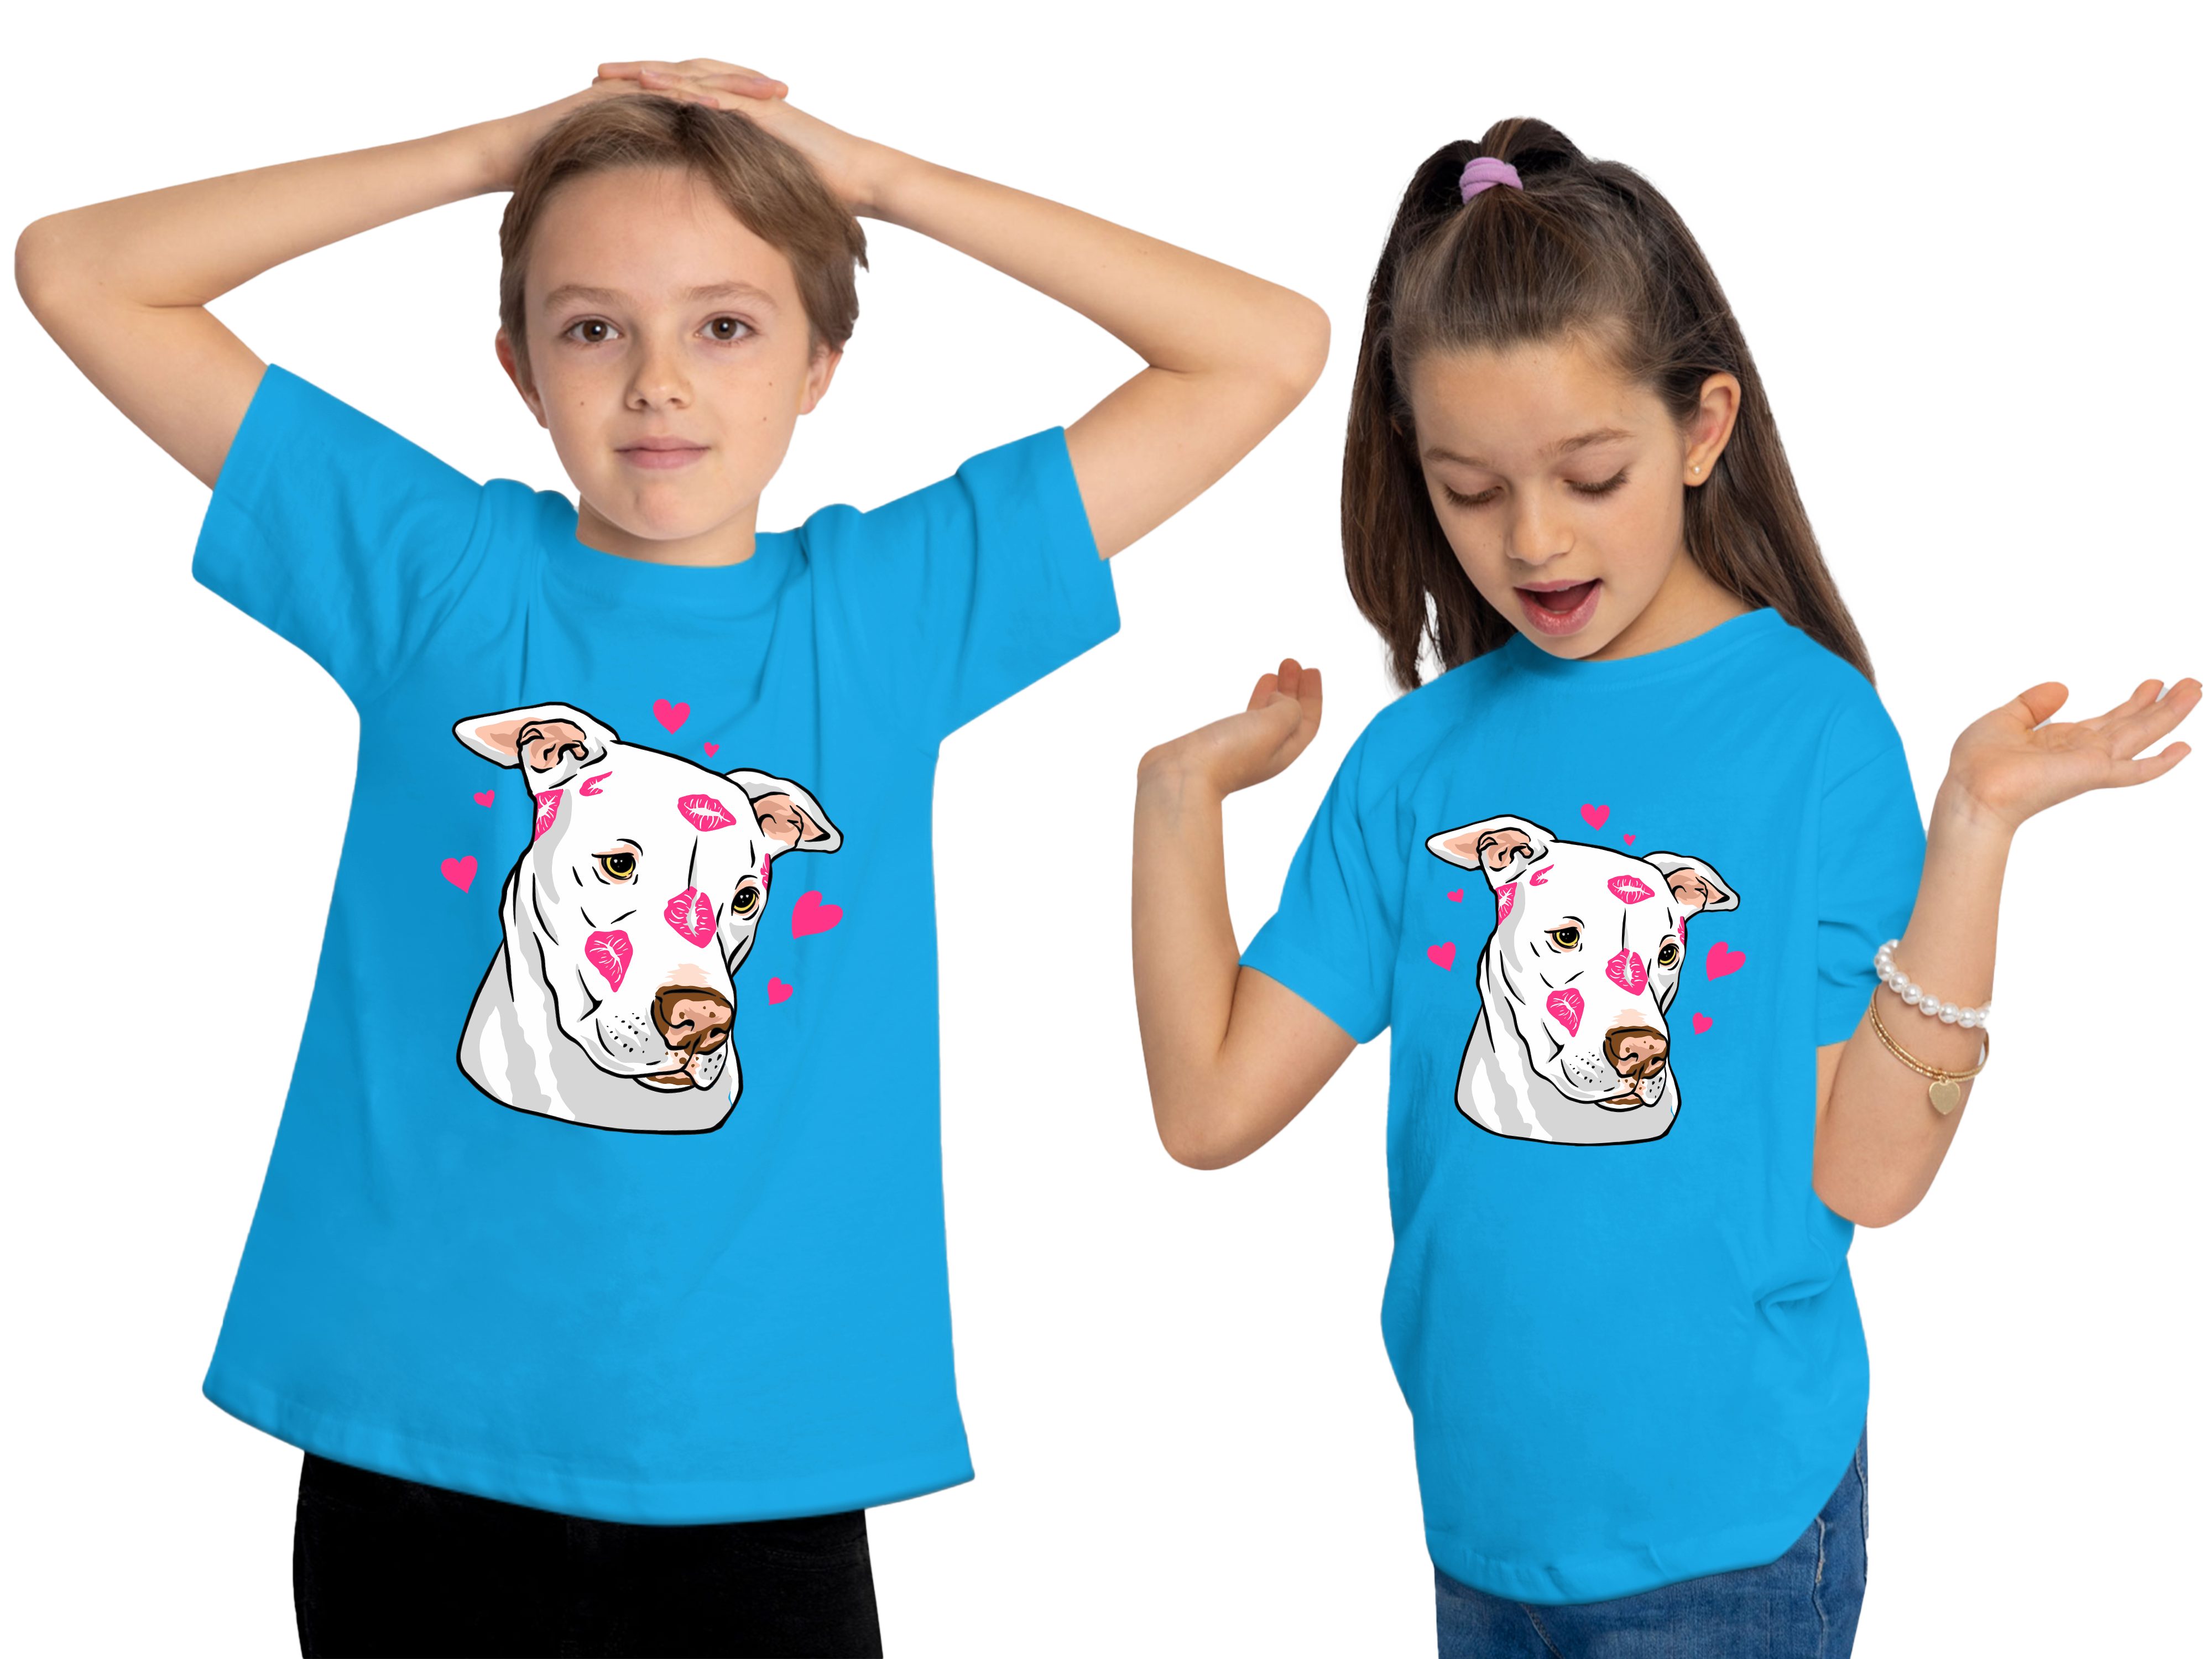 Pitbull MyDesign24 i229 aqua Baumwollshirt Aufdruck, Kinder Hunde bedrucktes - T-Shirt Herzen Print-Shirt mit mit blau